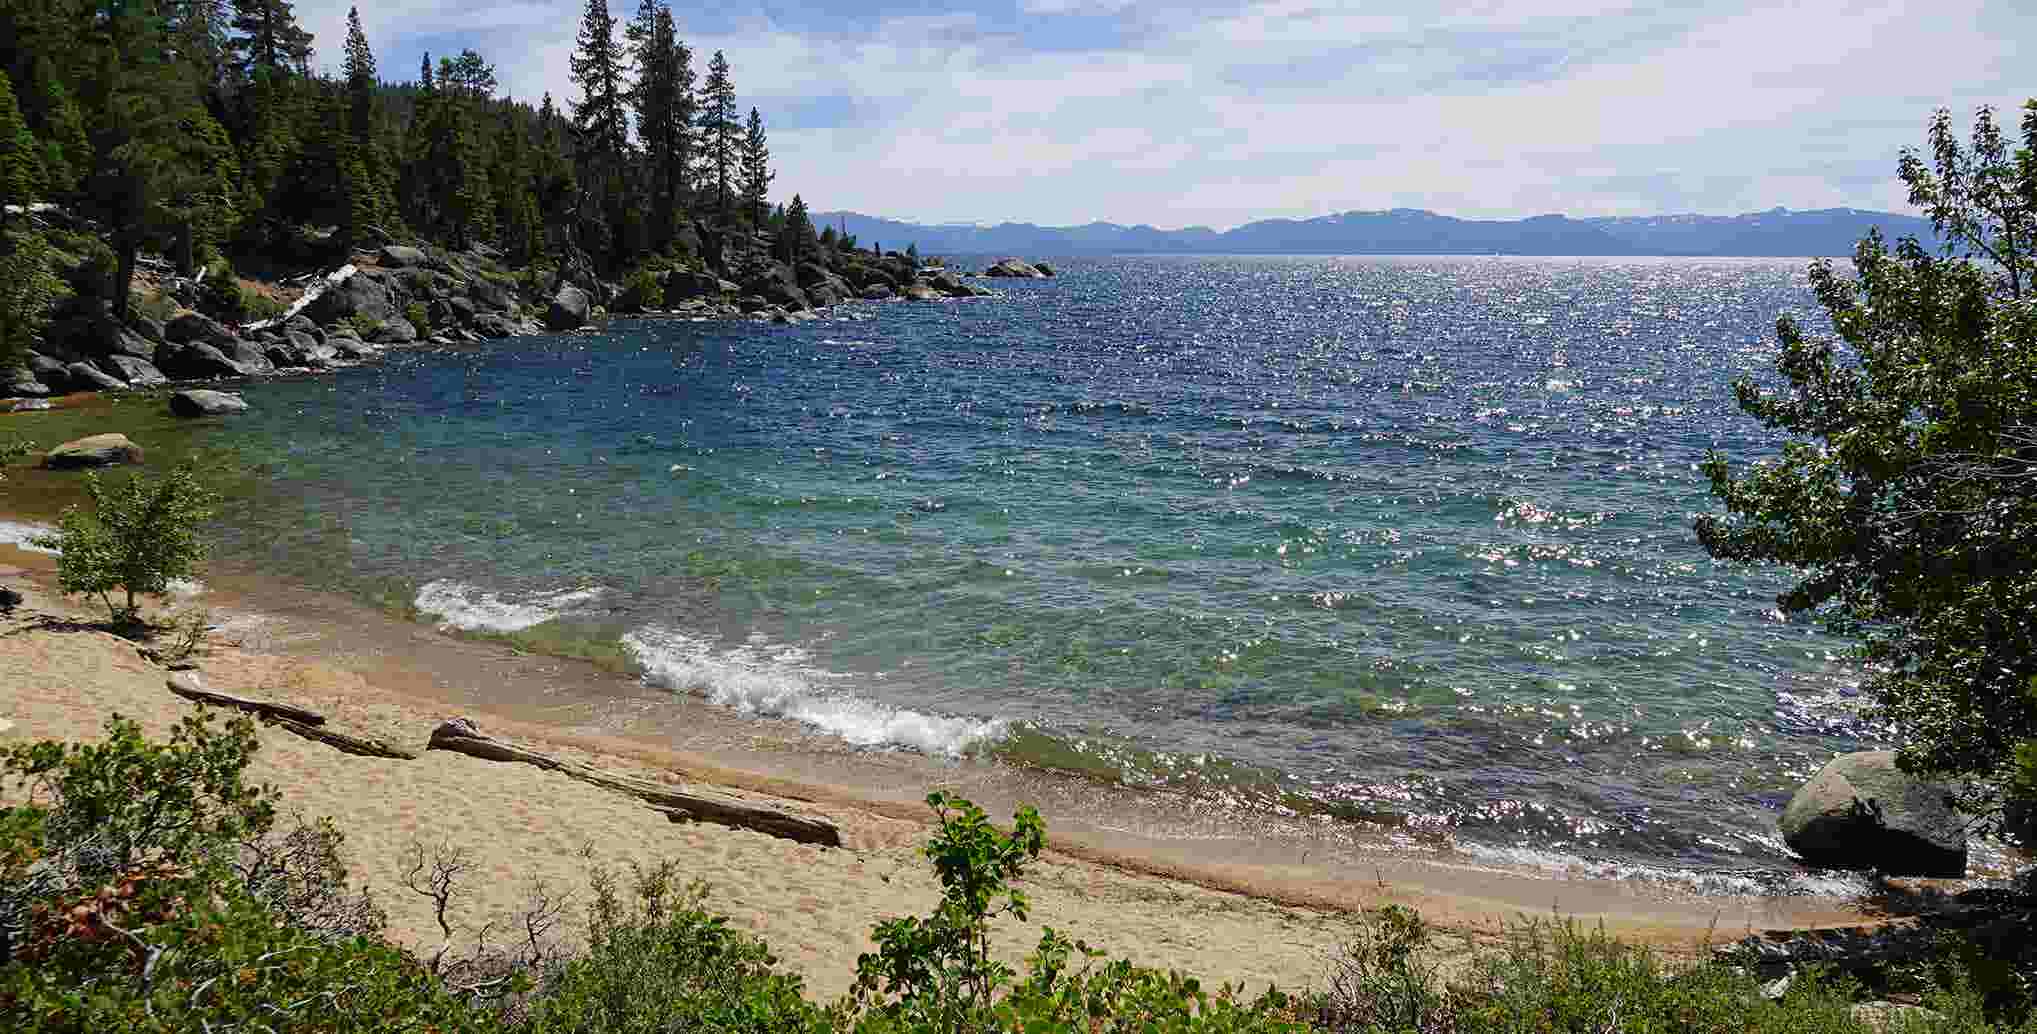 Tahoe nude beach controversy